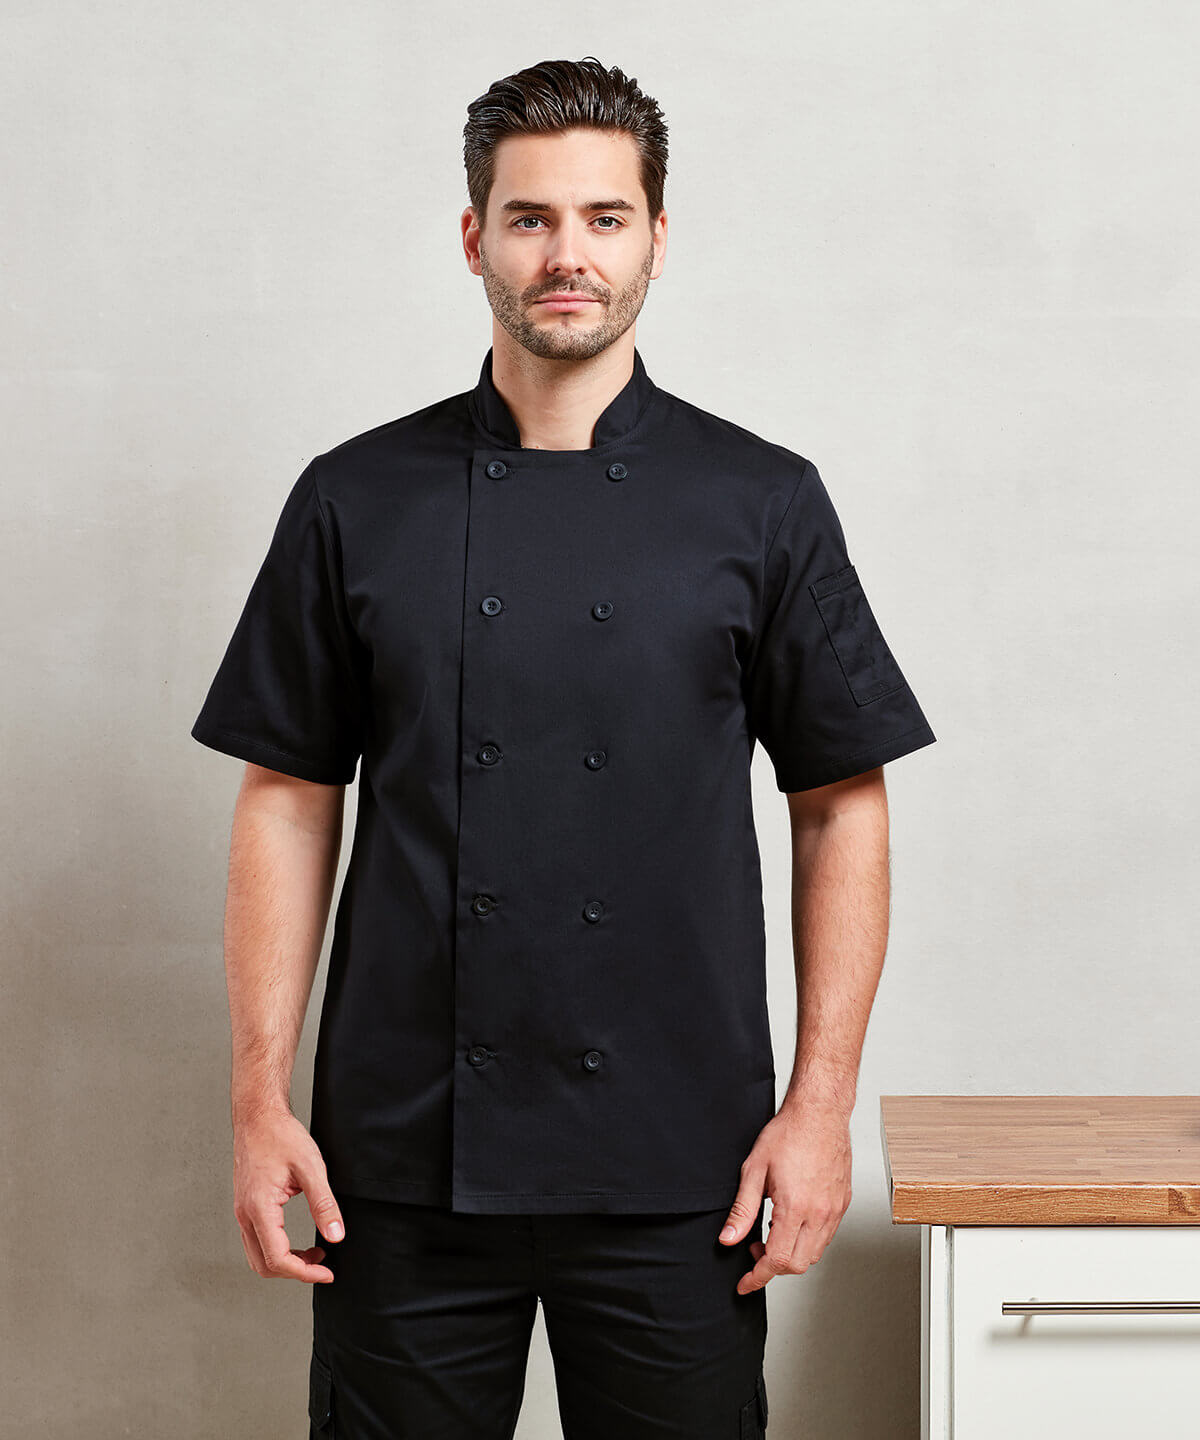 Premier Short Sleeve Chef's Jacket UK - black chef's jacket